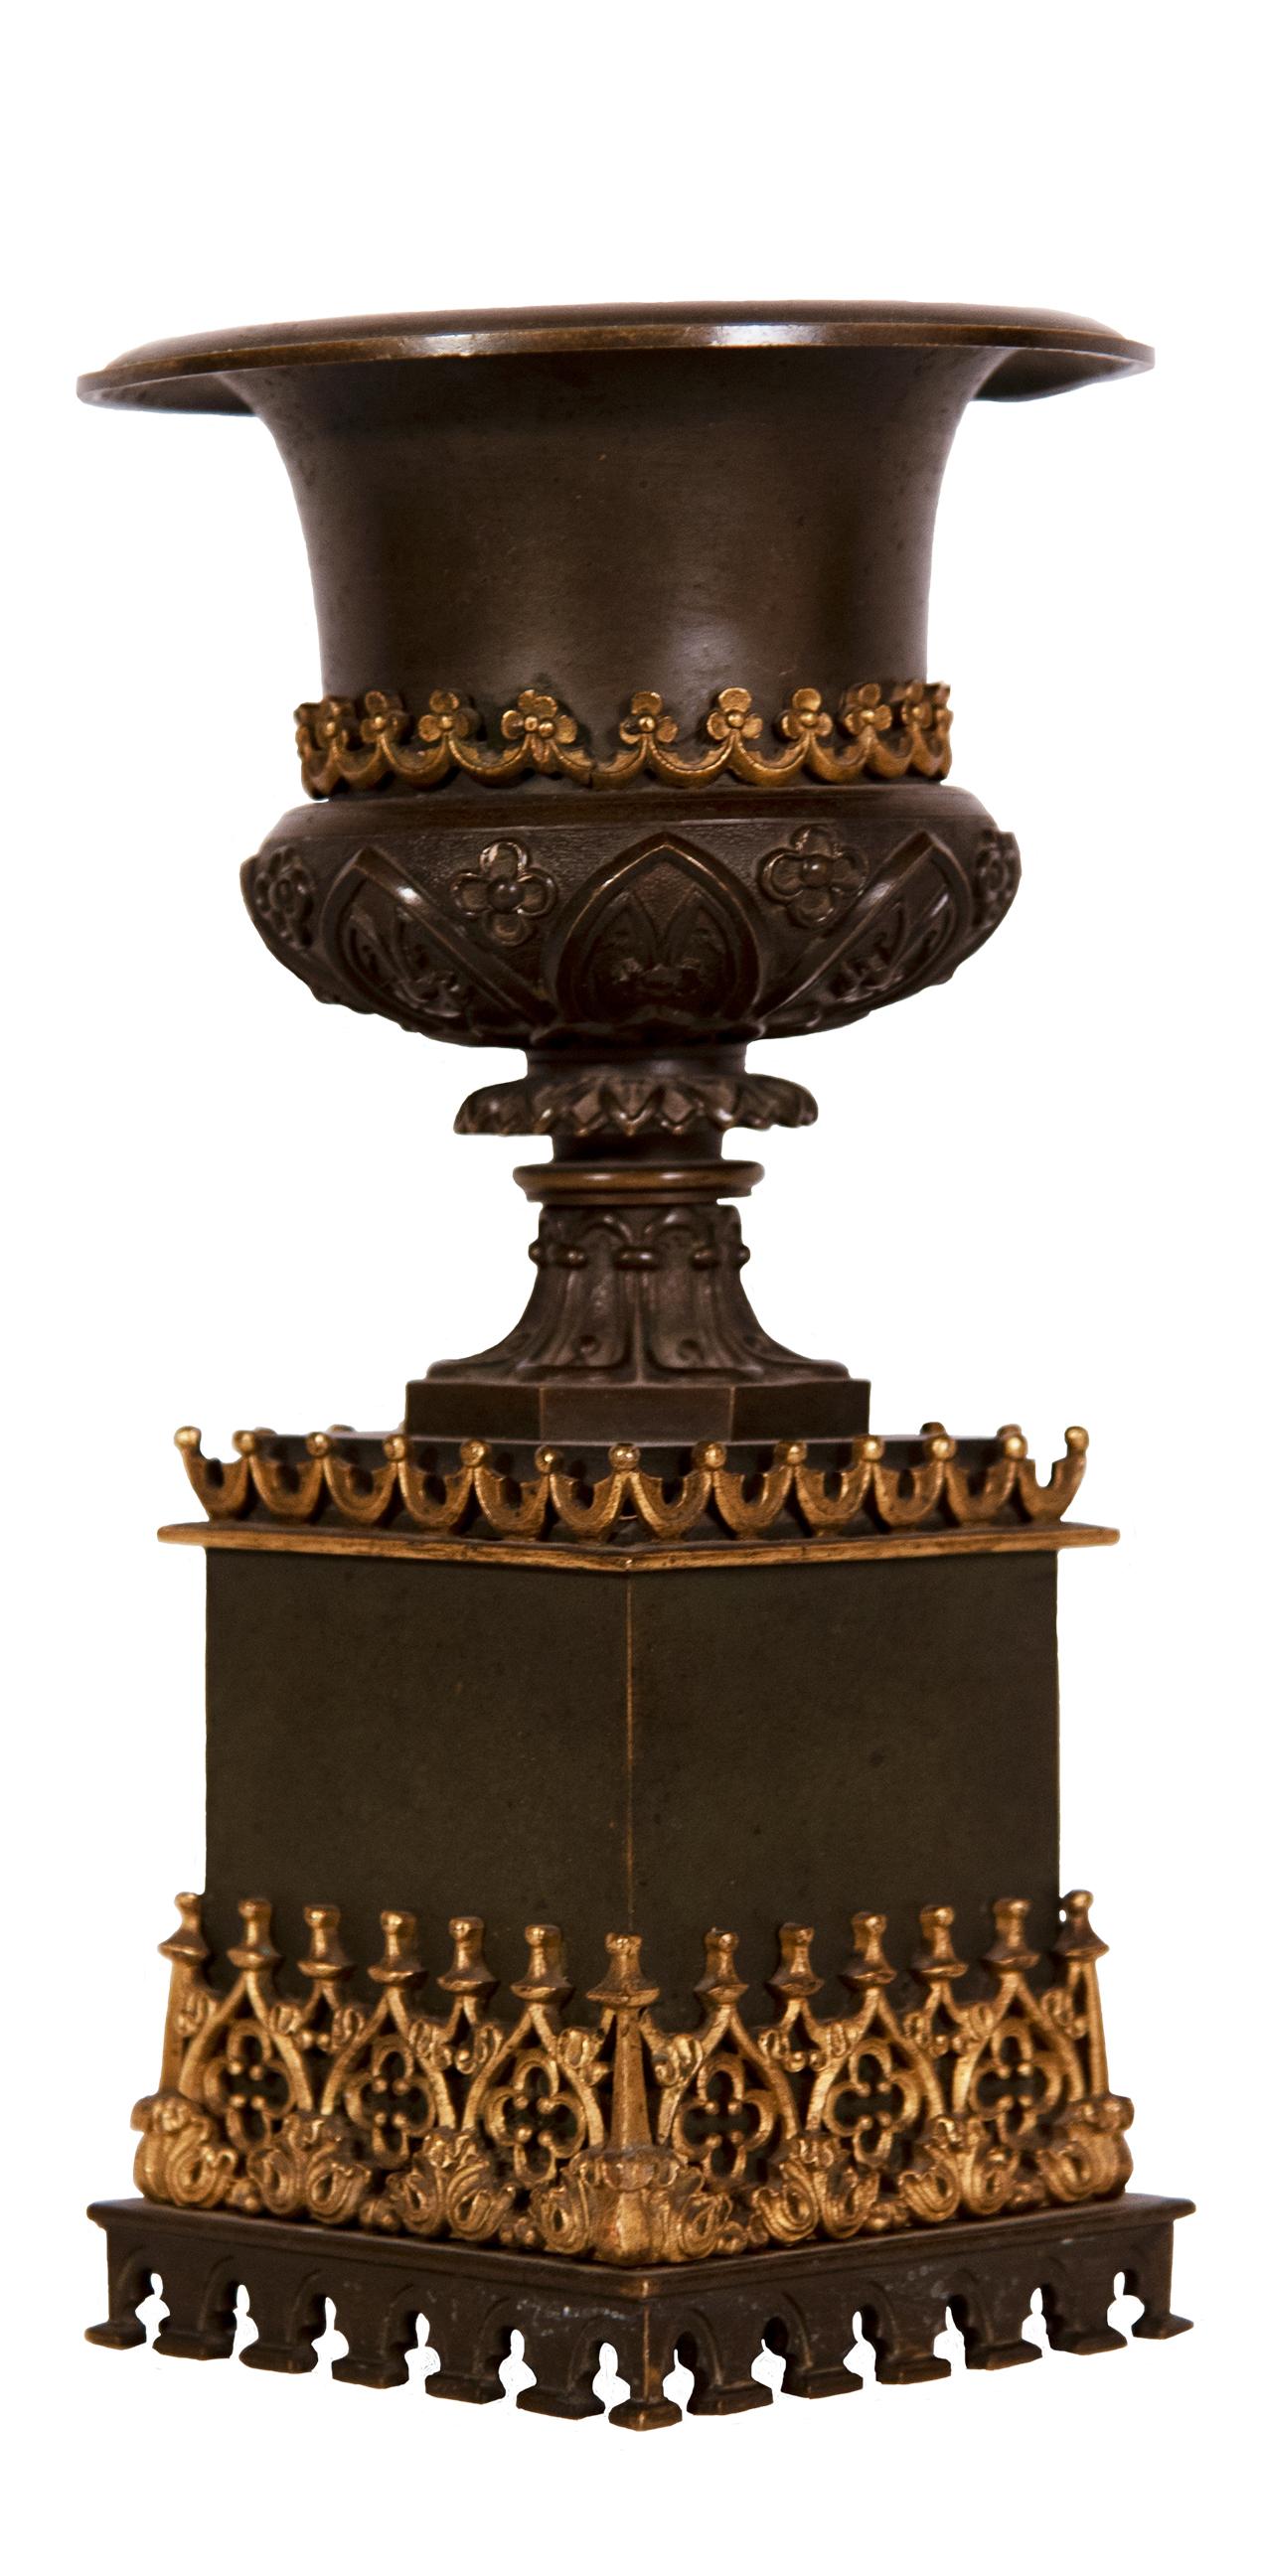 A 19th century bronze decorative urn.

Circa 1860.